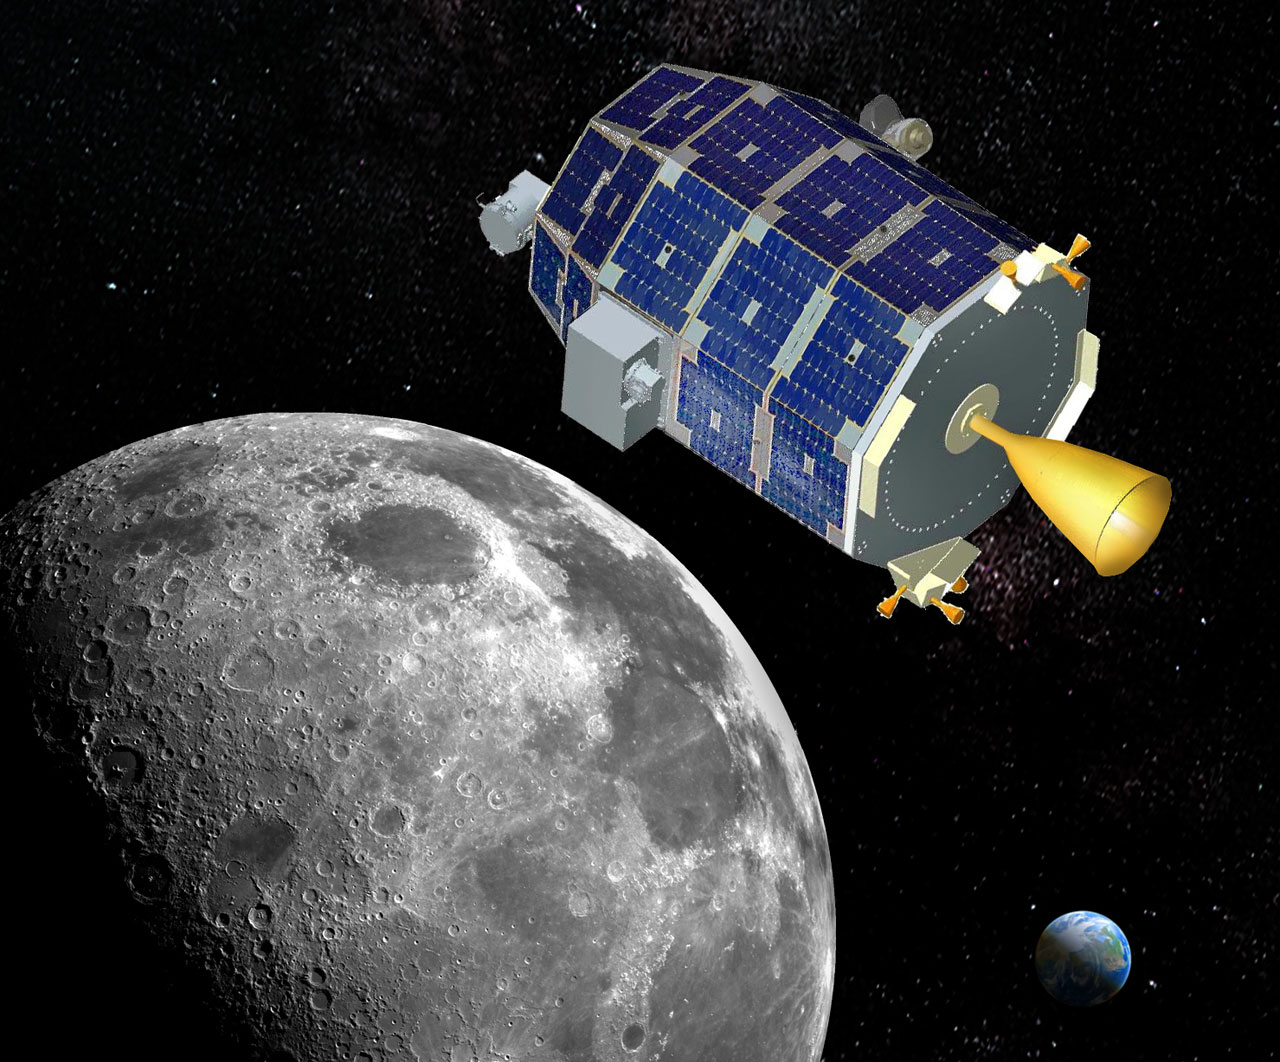 NASA's LADEE spacecraft enters lunar orbit. Image: NASA